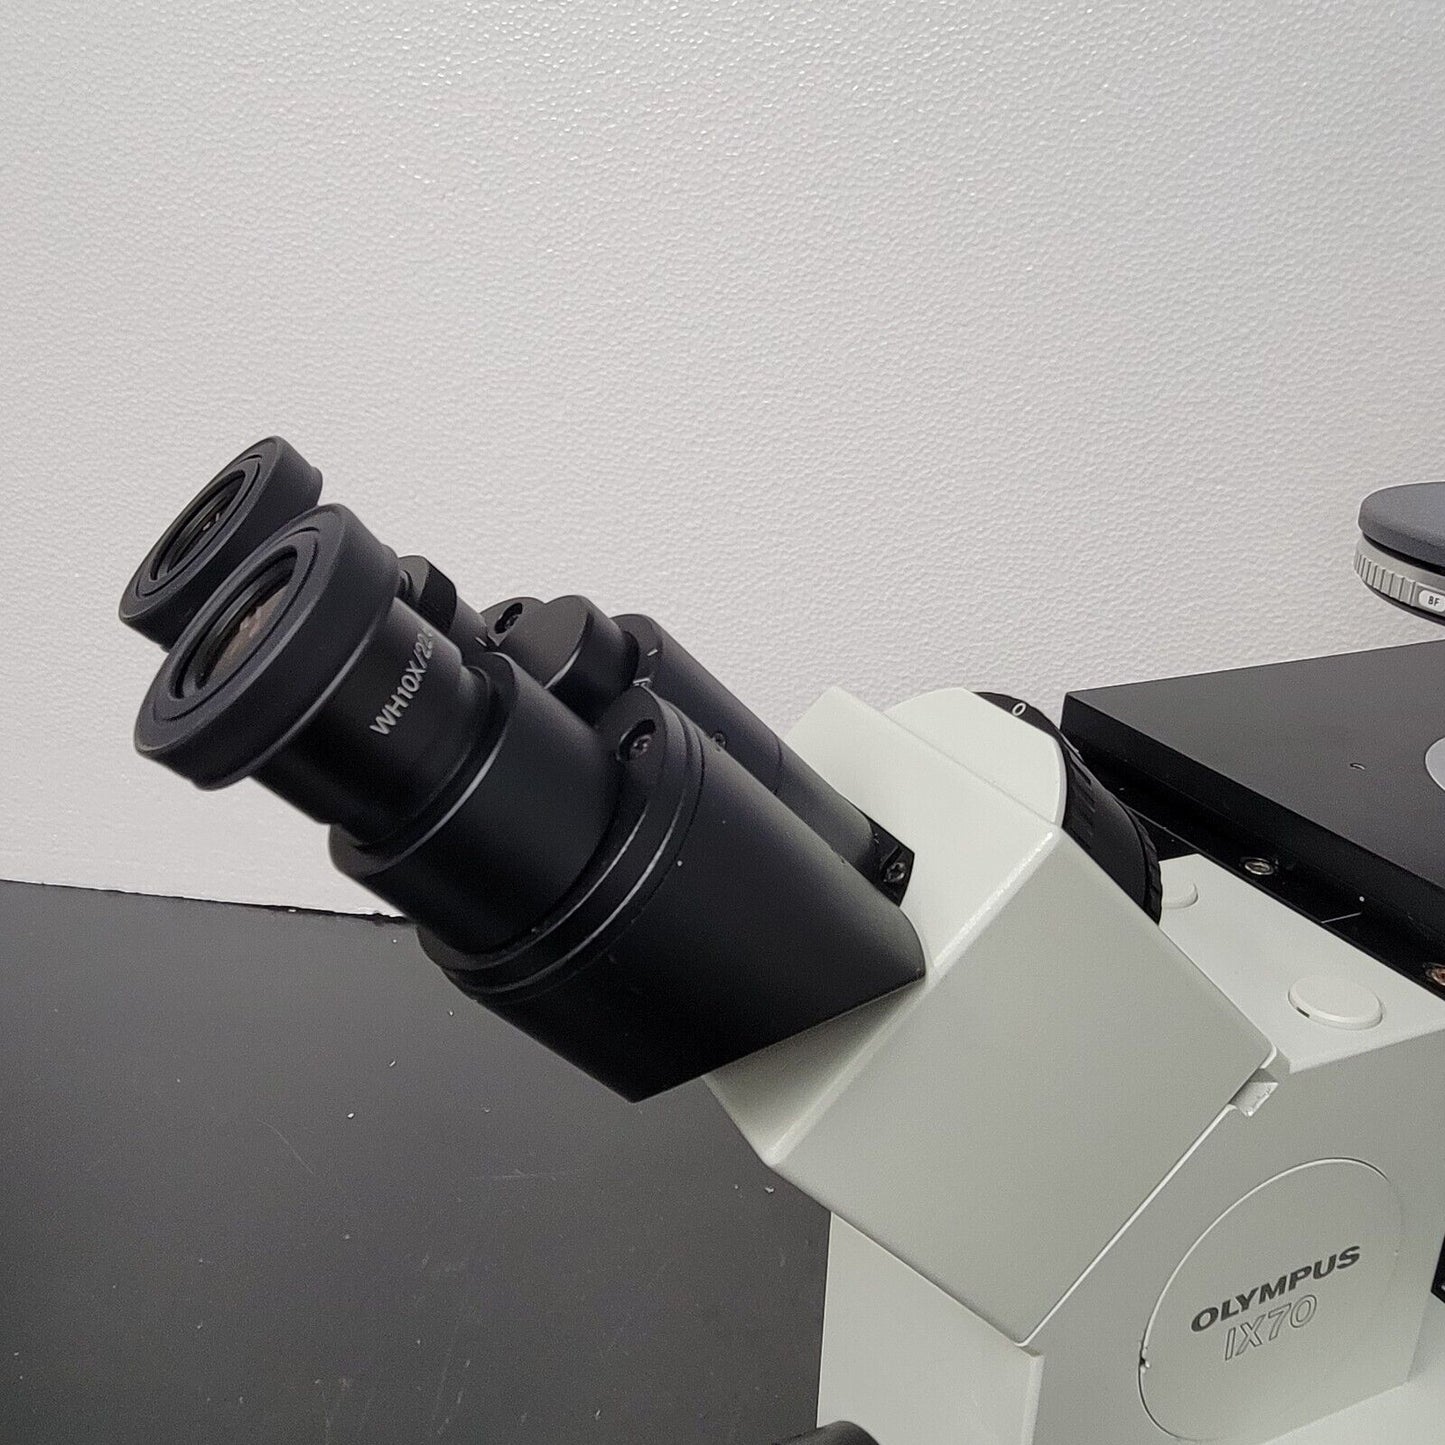 Olympus Microscope IX70 with HMC Hoffman Modulation Contrast - microscopemarketplace